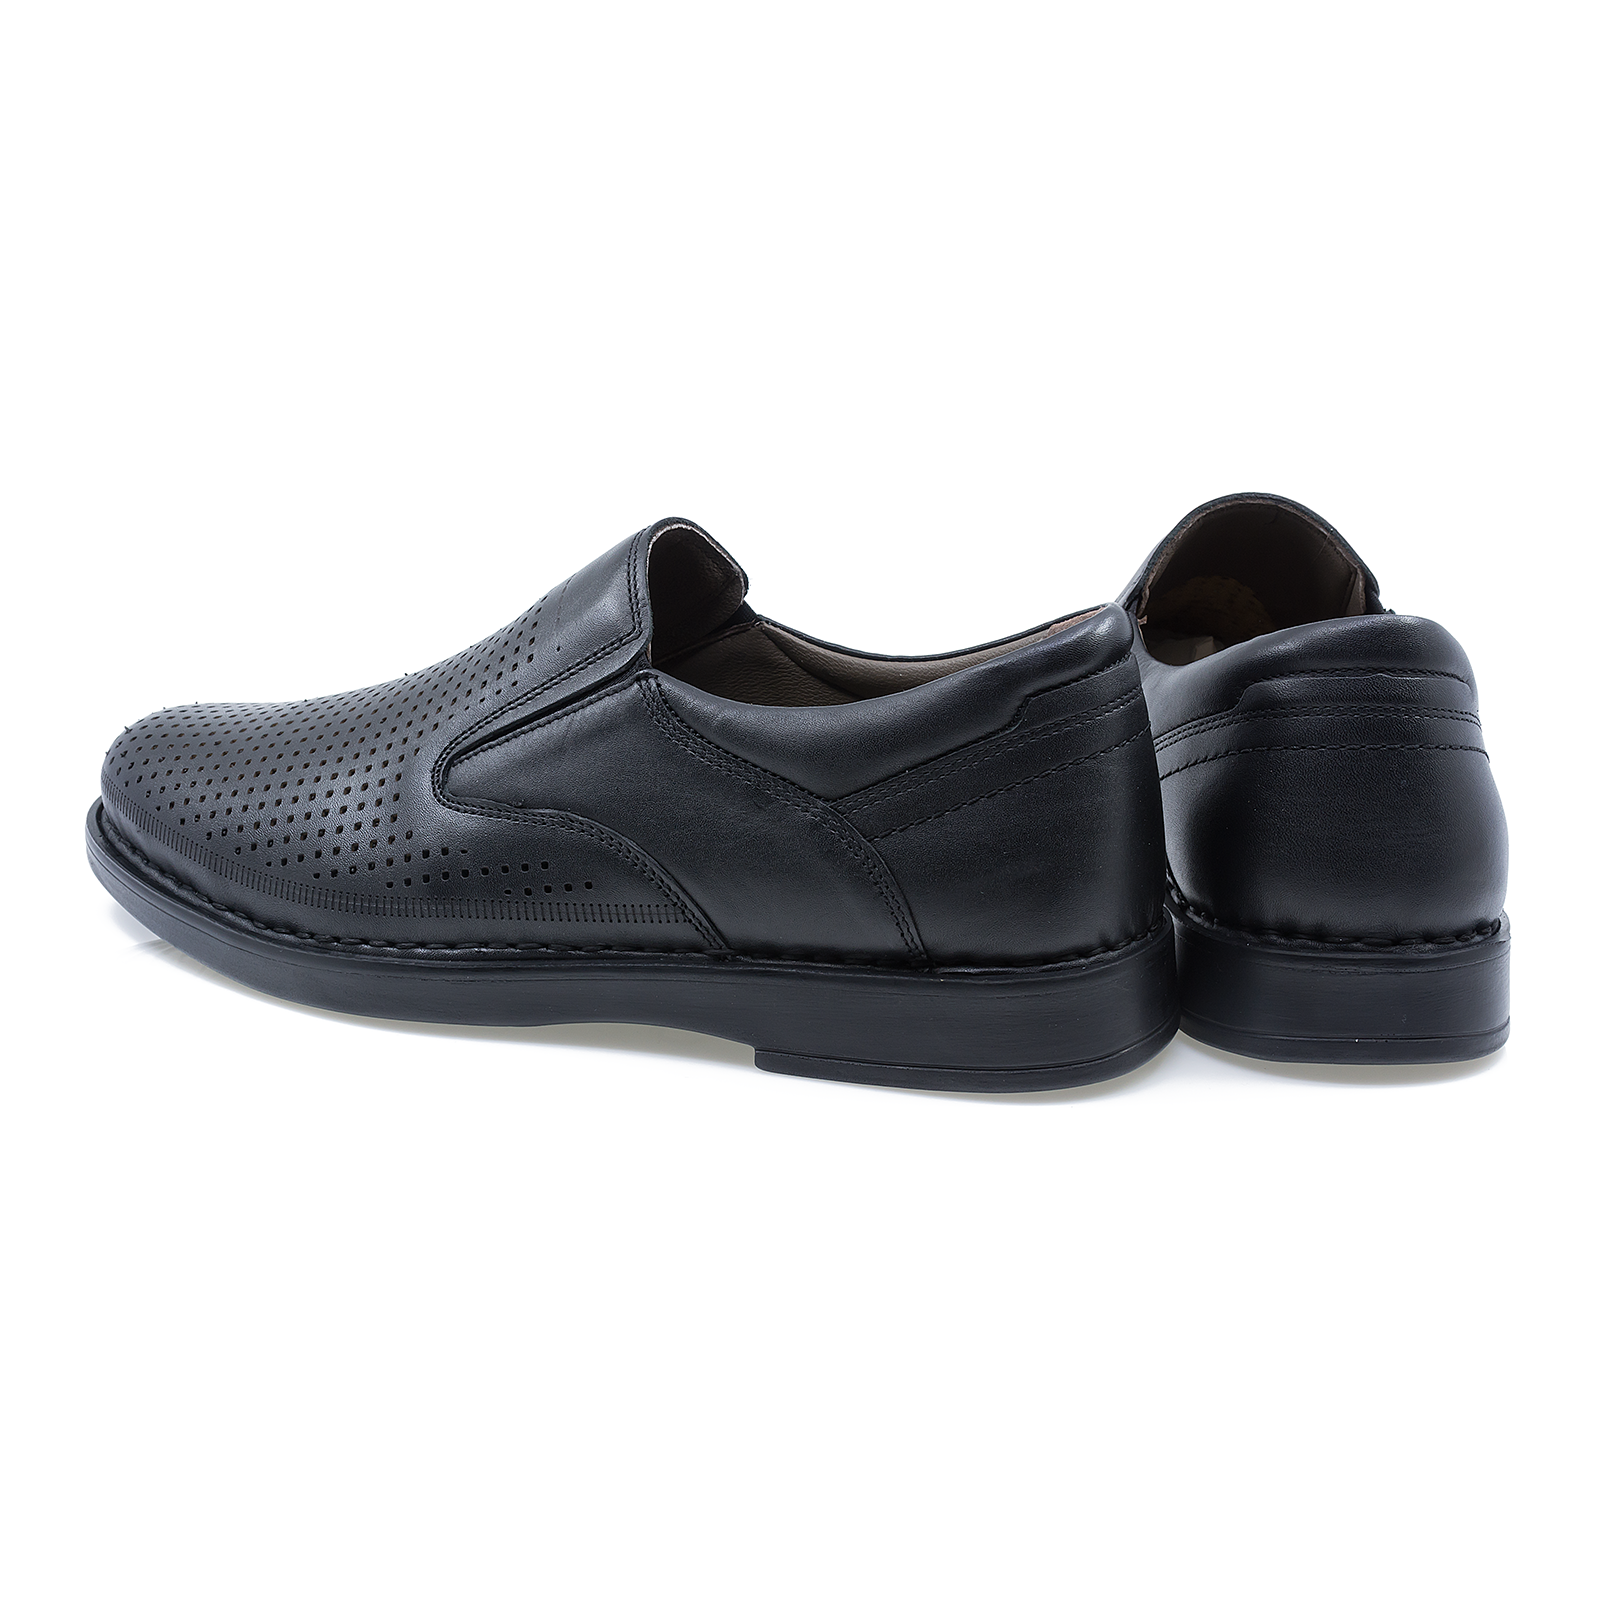 Pantofi-barbati-Dimport-104-3-eleganti-piele-naturala-negru-nouamoda-5